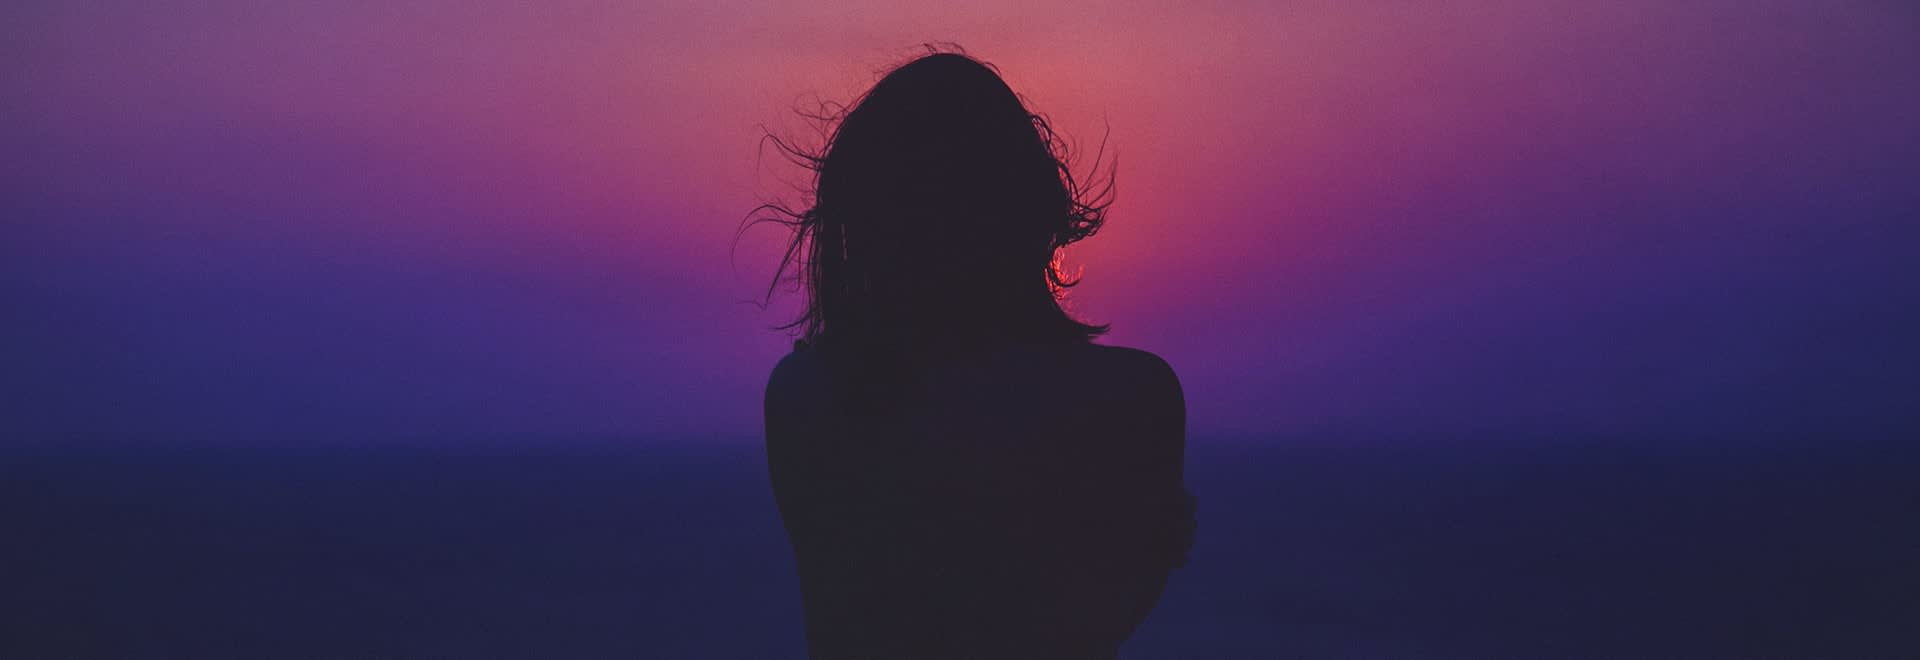 A woman's shape on the dark purple sunset background